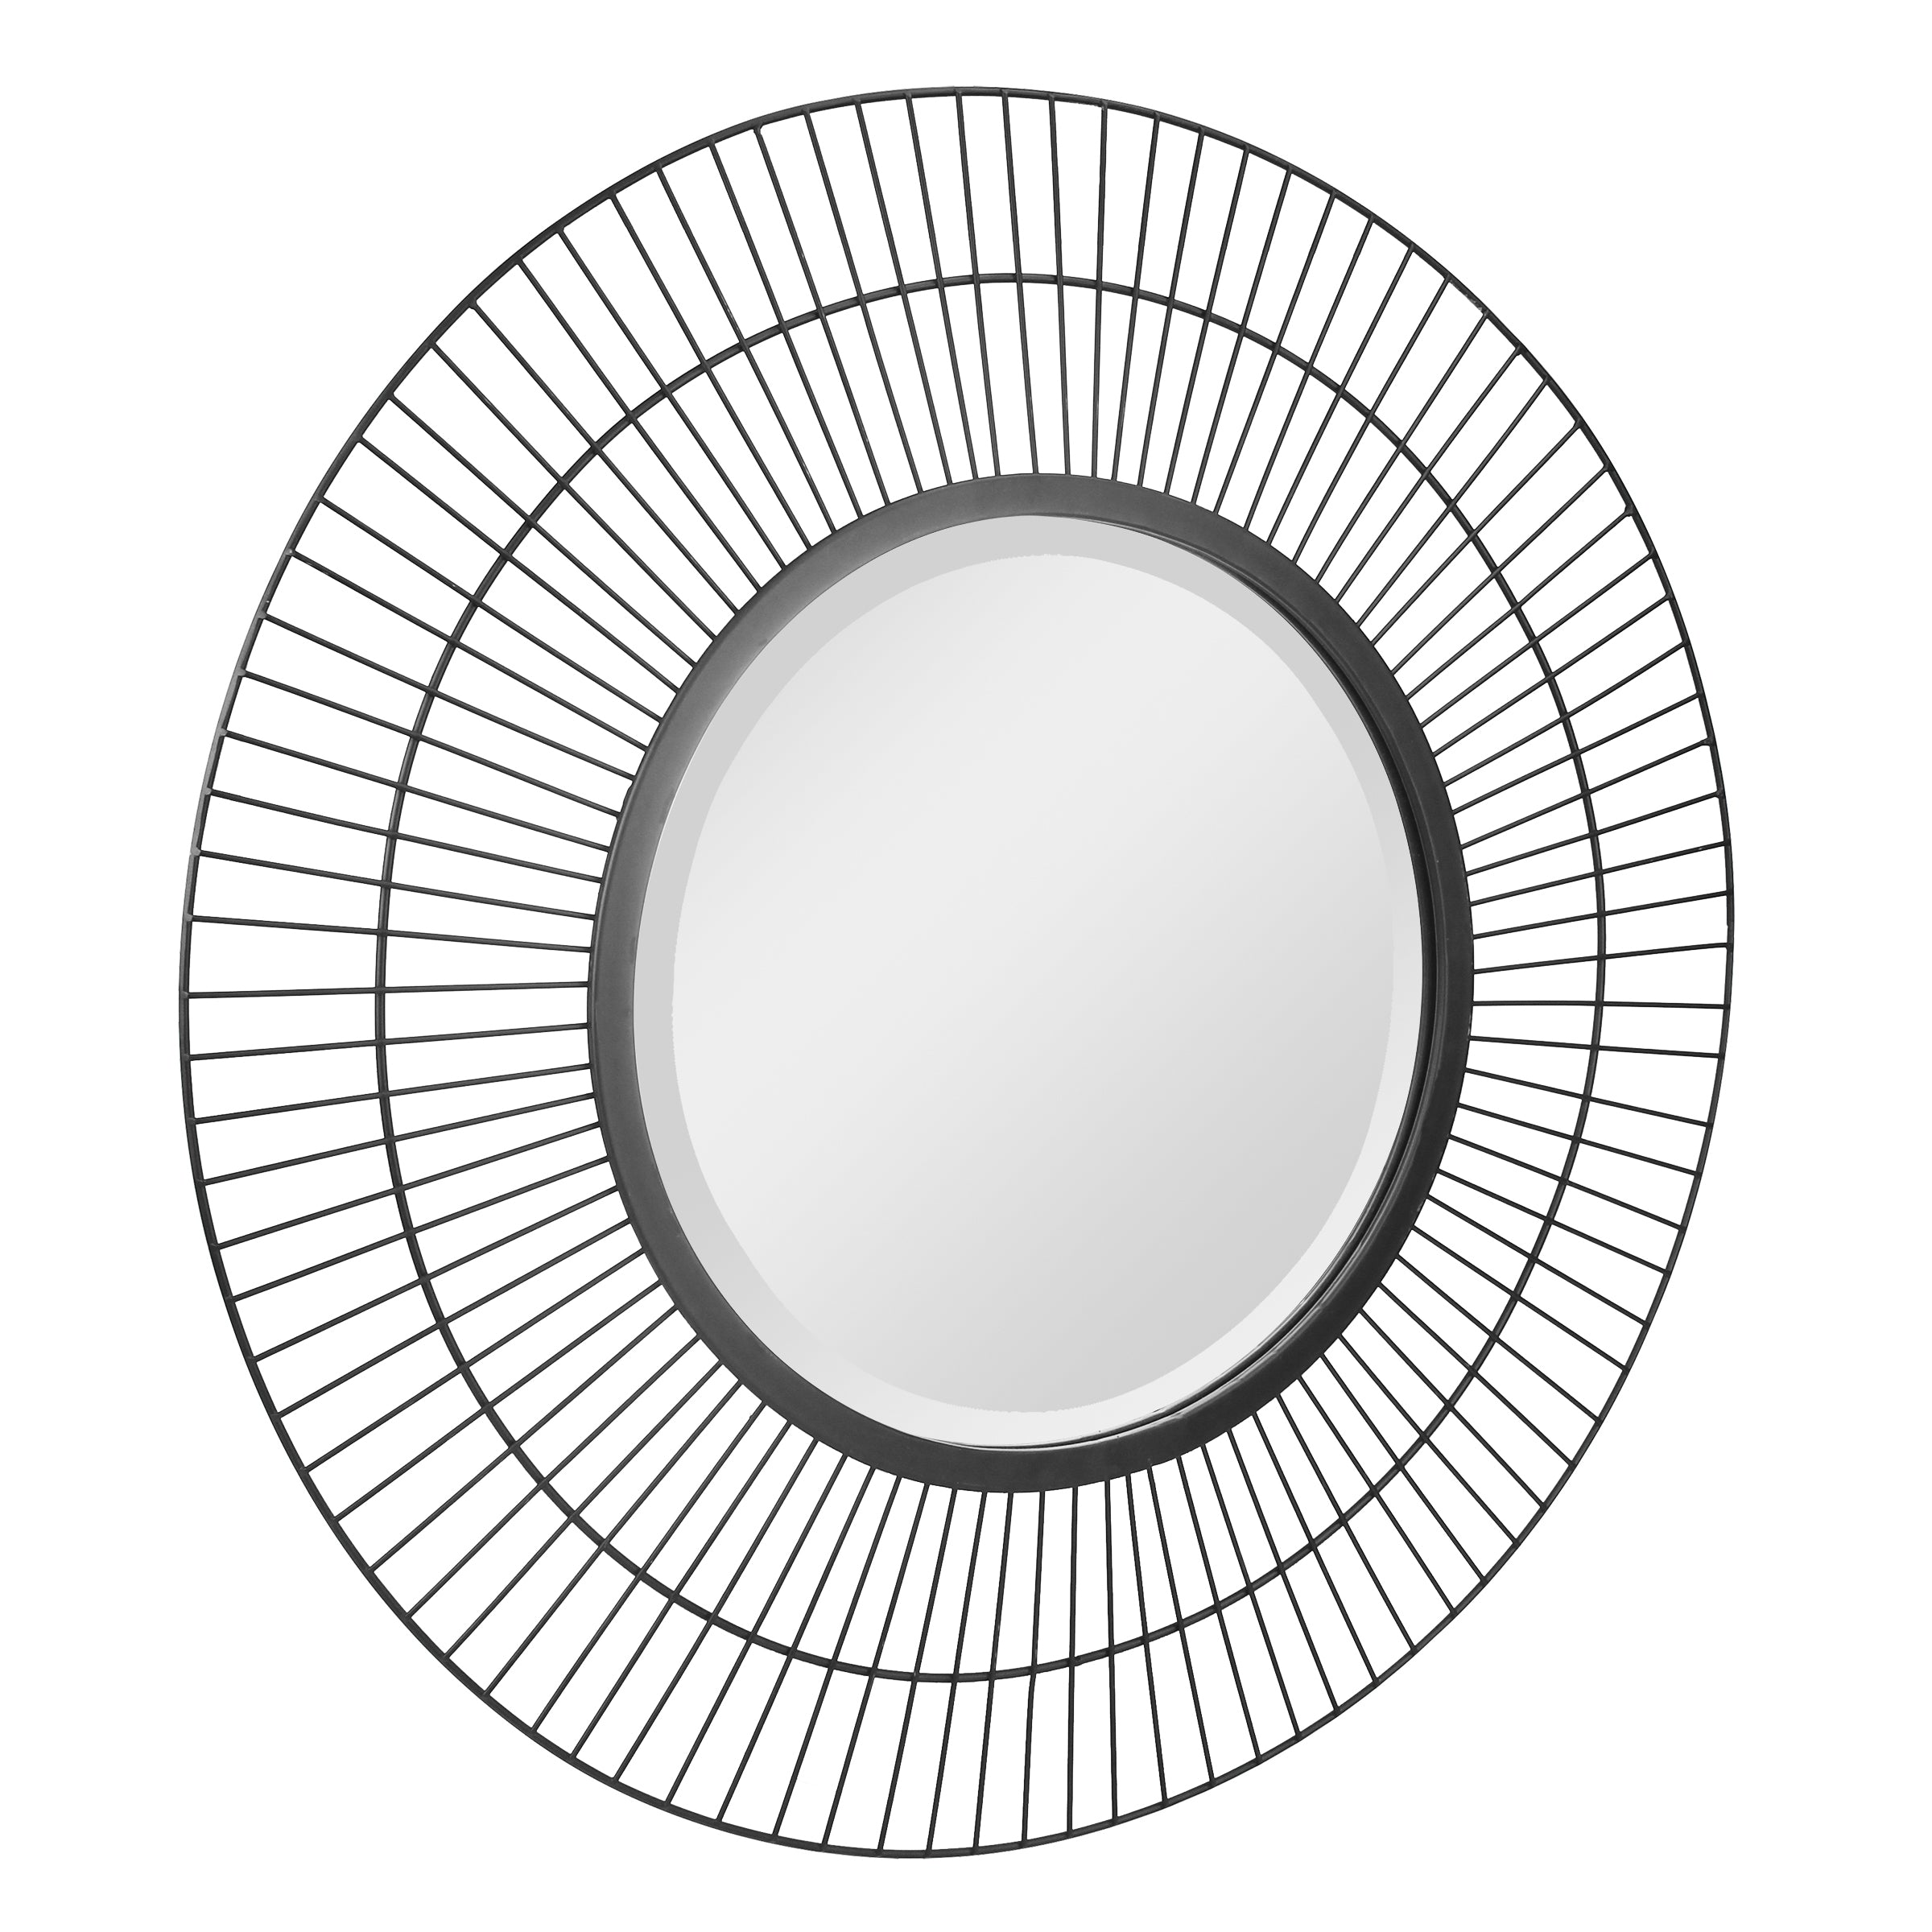 24" Decorative Modern Round Metal Wire Mirror for Wall